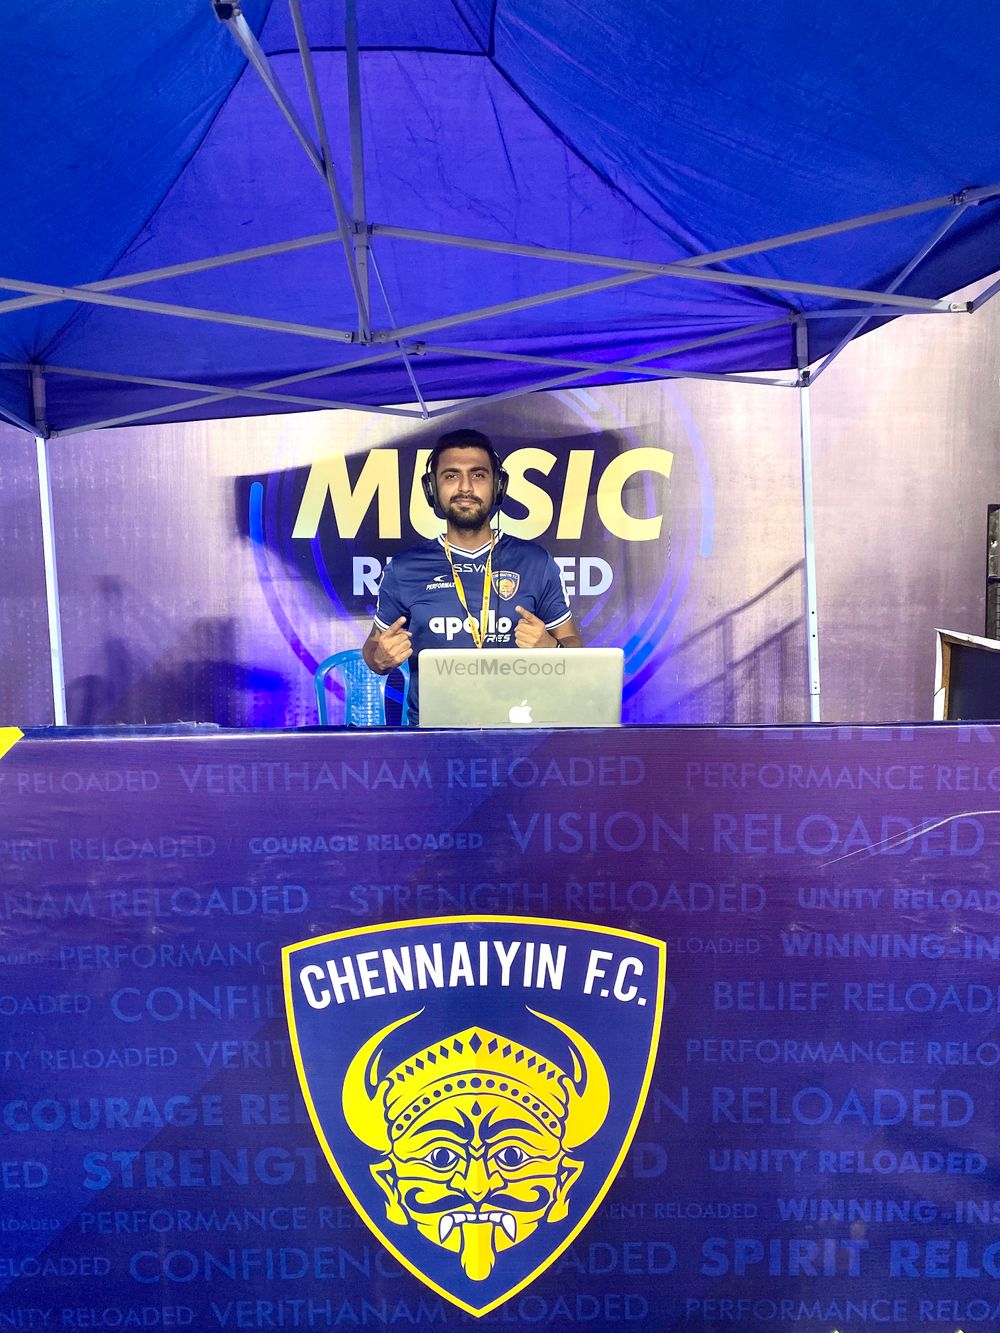 Photo From Official DJ Of Chennaiyin F.C  - By DJ Sunny Deepak